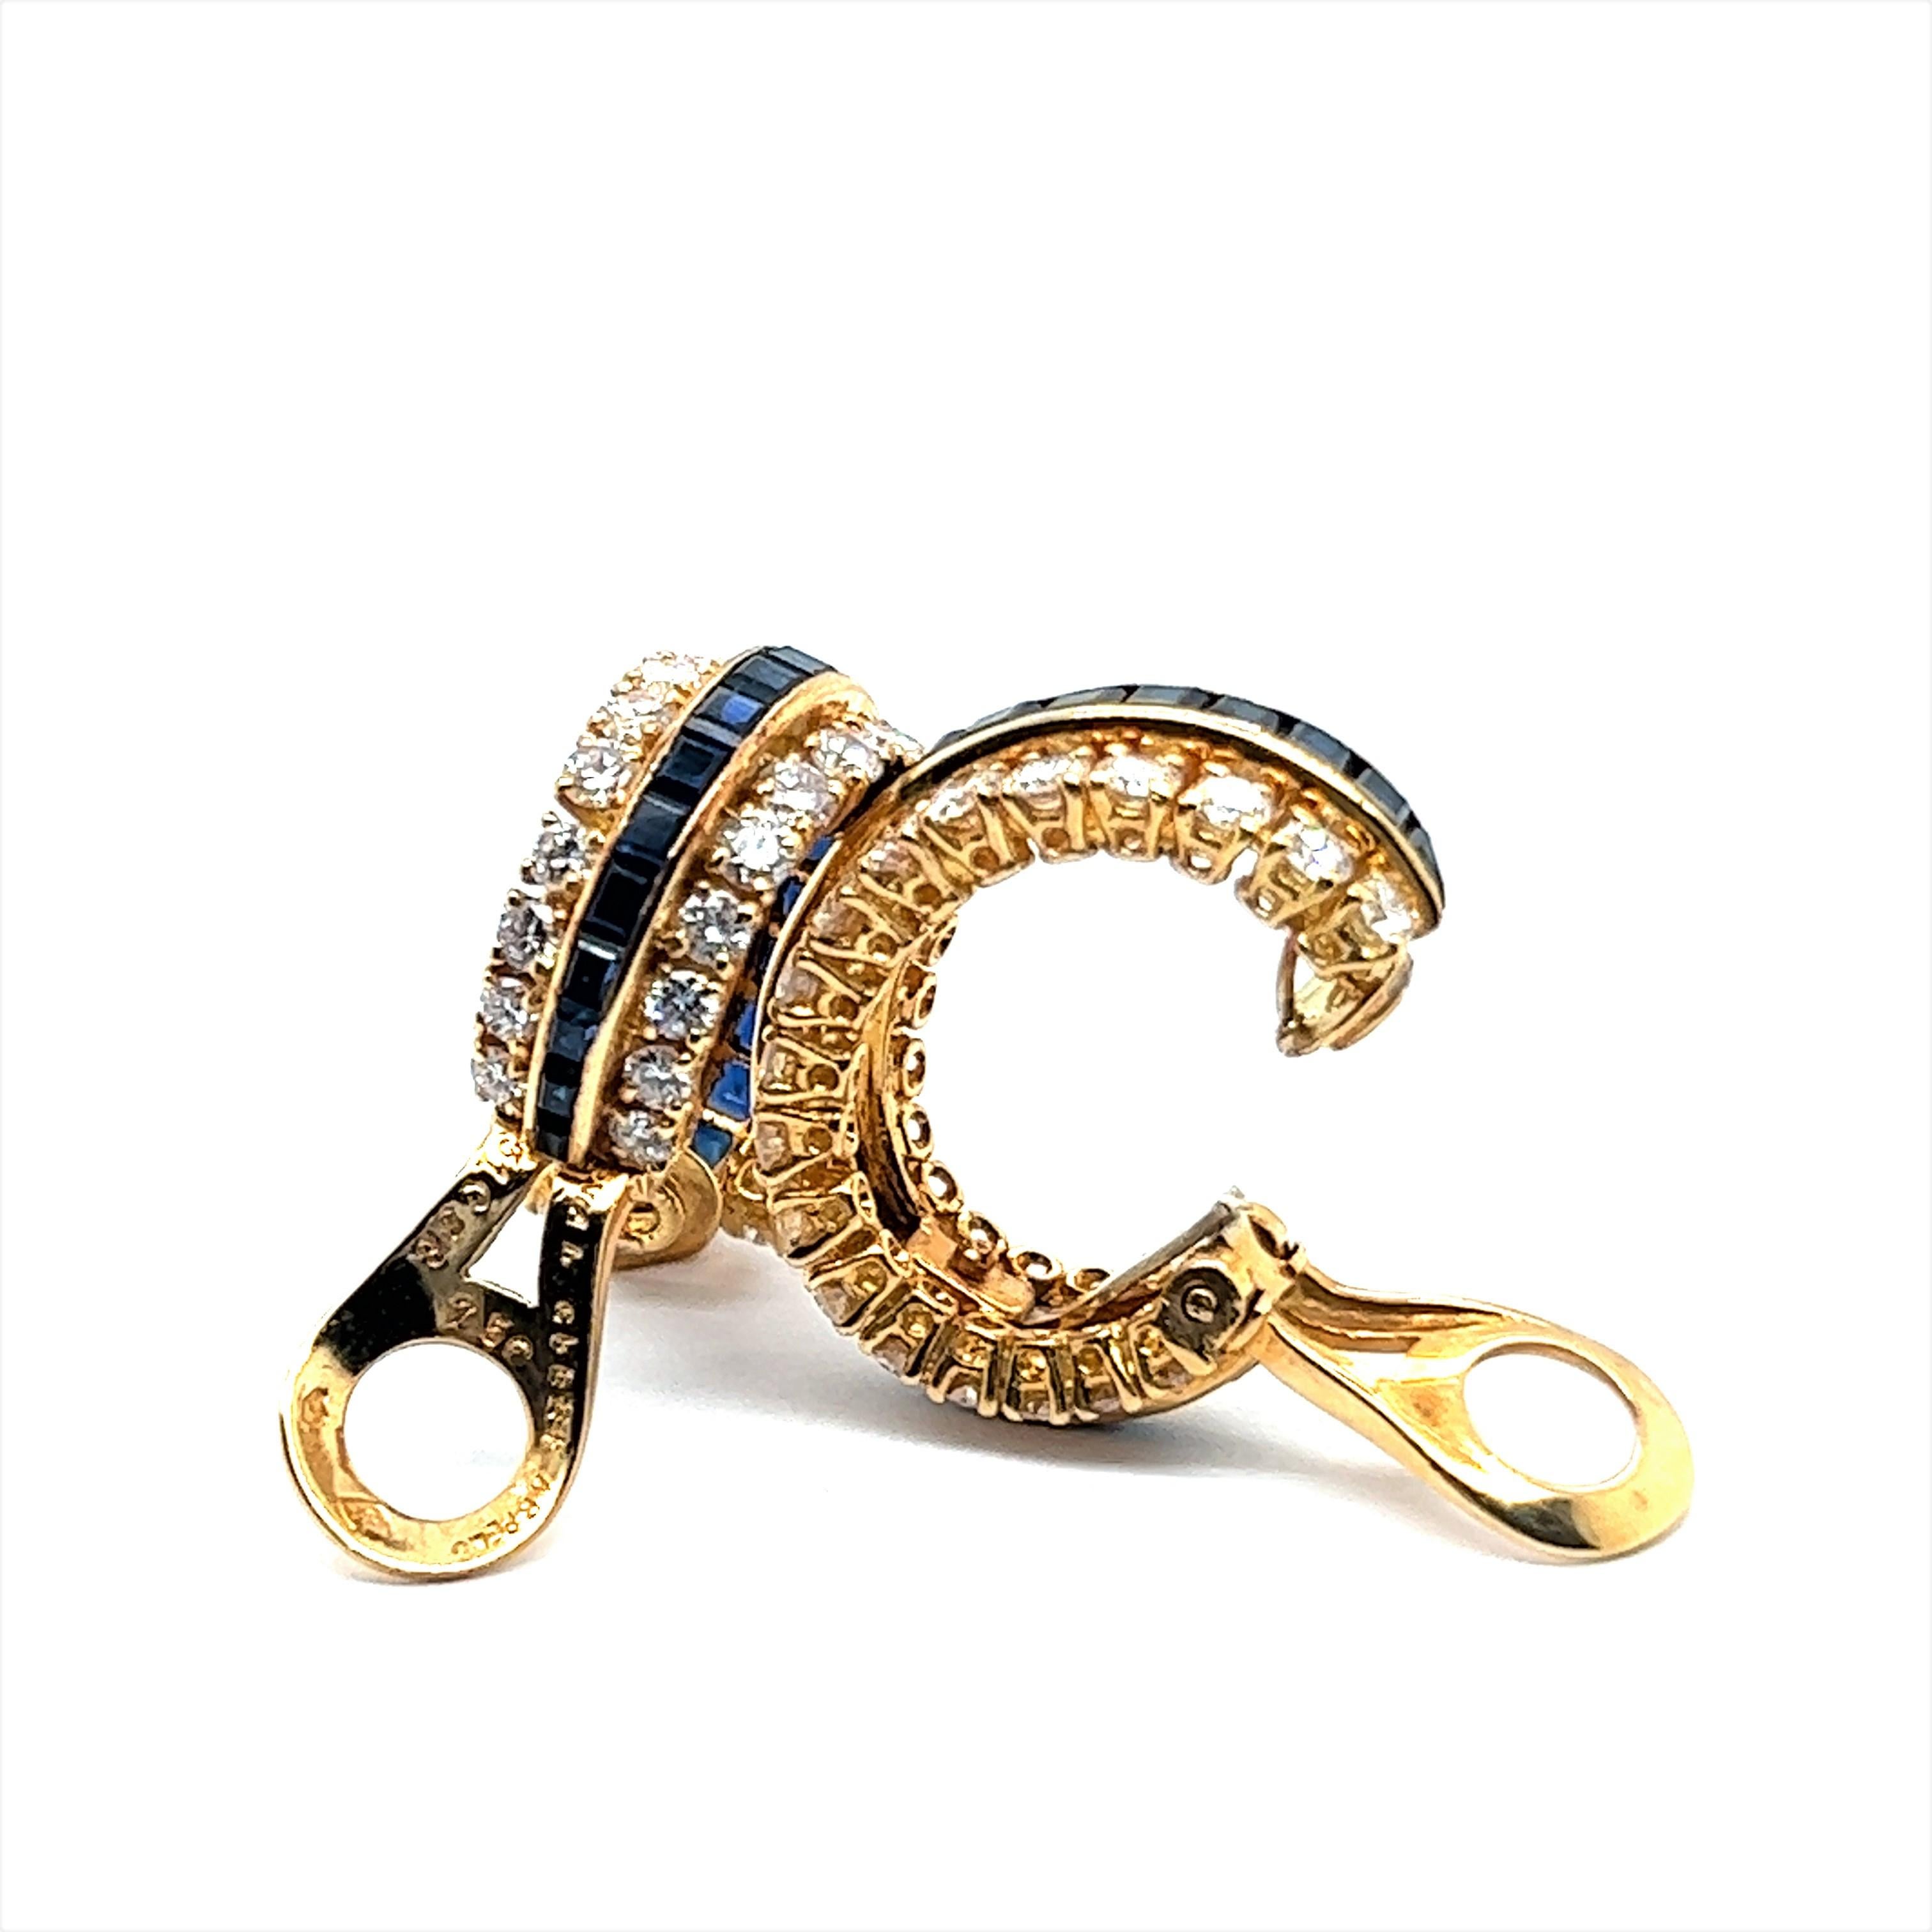 Elegant Van Cleef & Arpels Earclips in 18K Gold with Sapphires and Diamonds 1